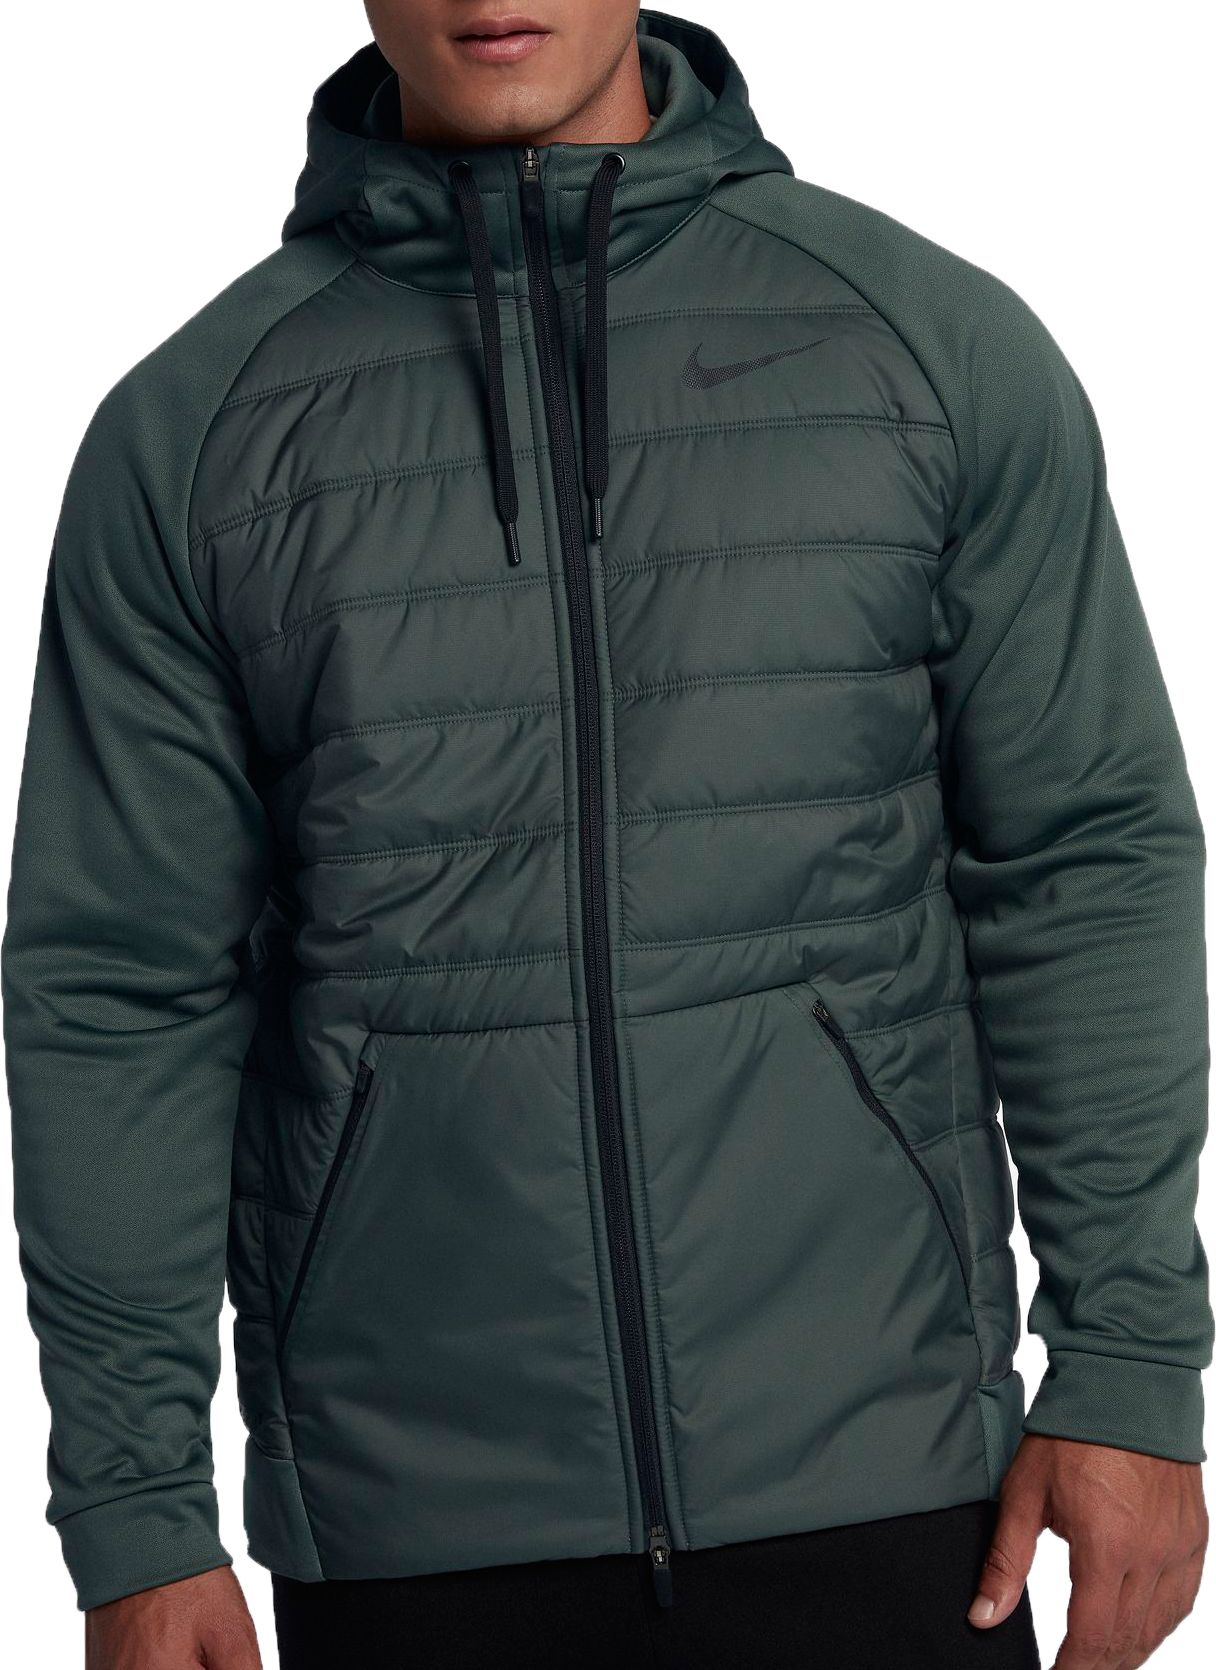 Men's Jackets & Winter Coats | Price Match Guarantee at DICK’S